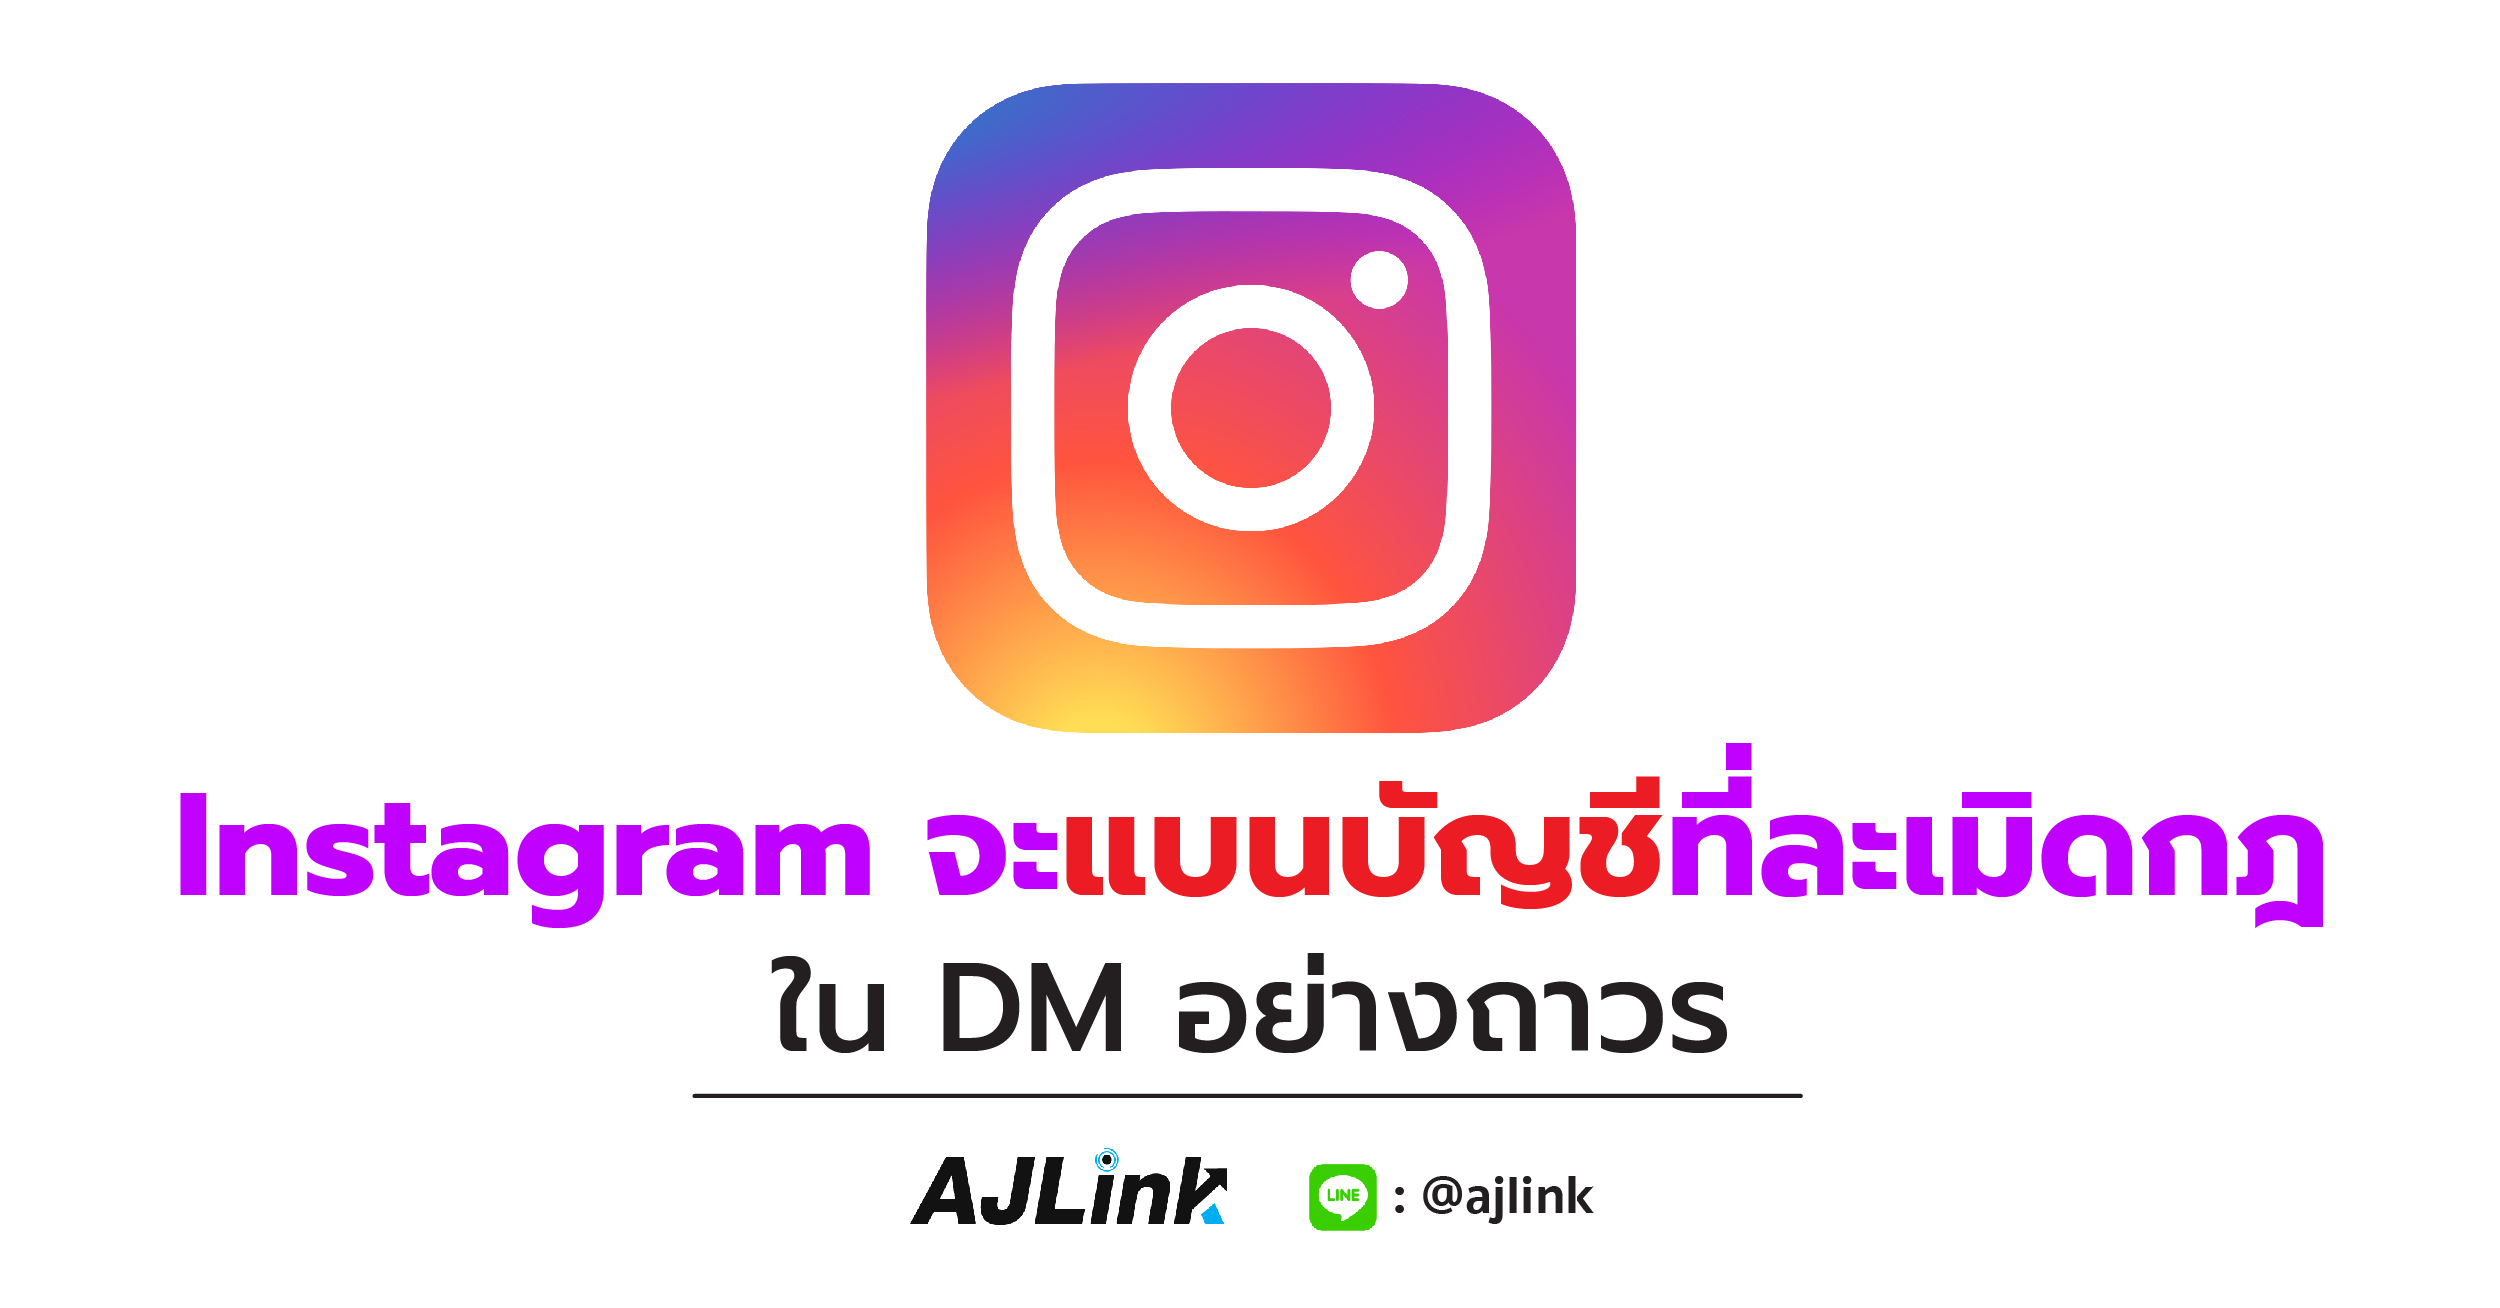 Instagram จะแบนบัญชีที่ละเมิดกฎใน DM อย่างถาวร